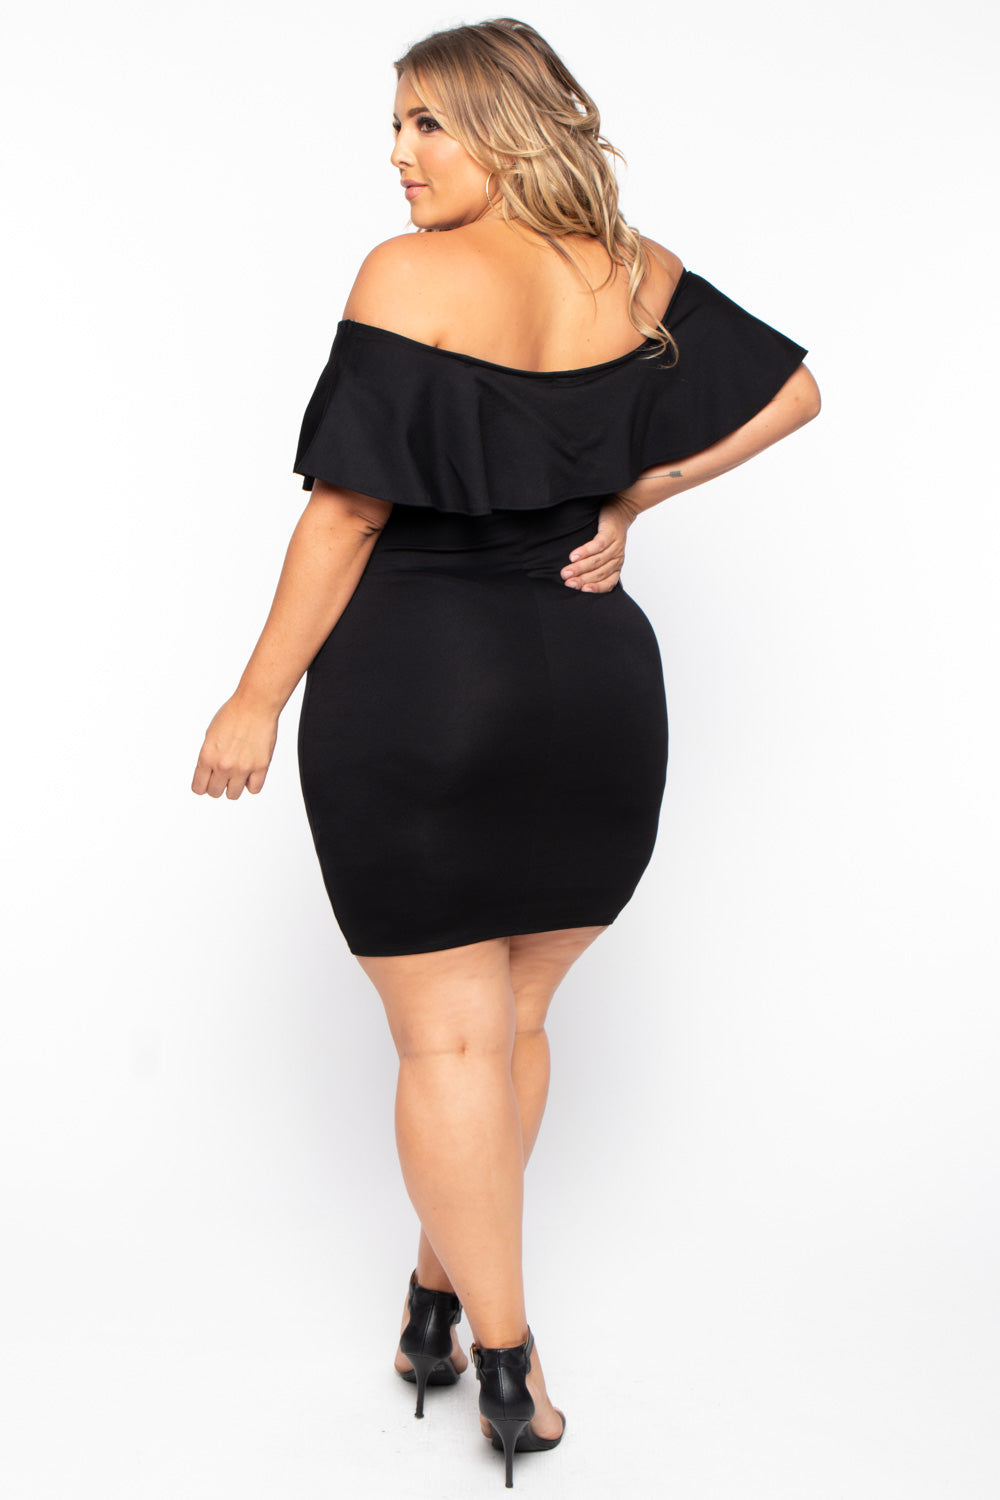 Plus Size Frill Bodycon Dress - Black - Curvy Sense